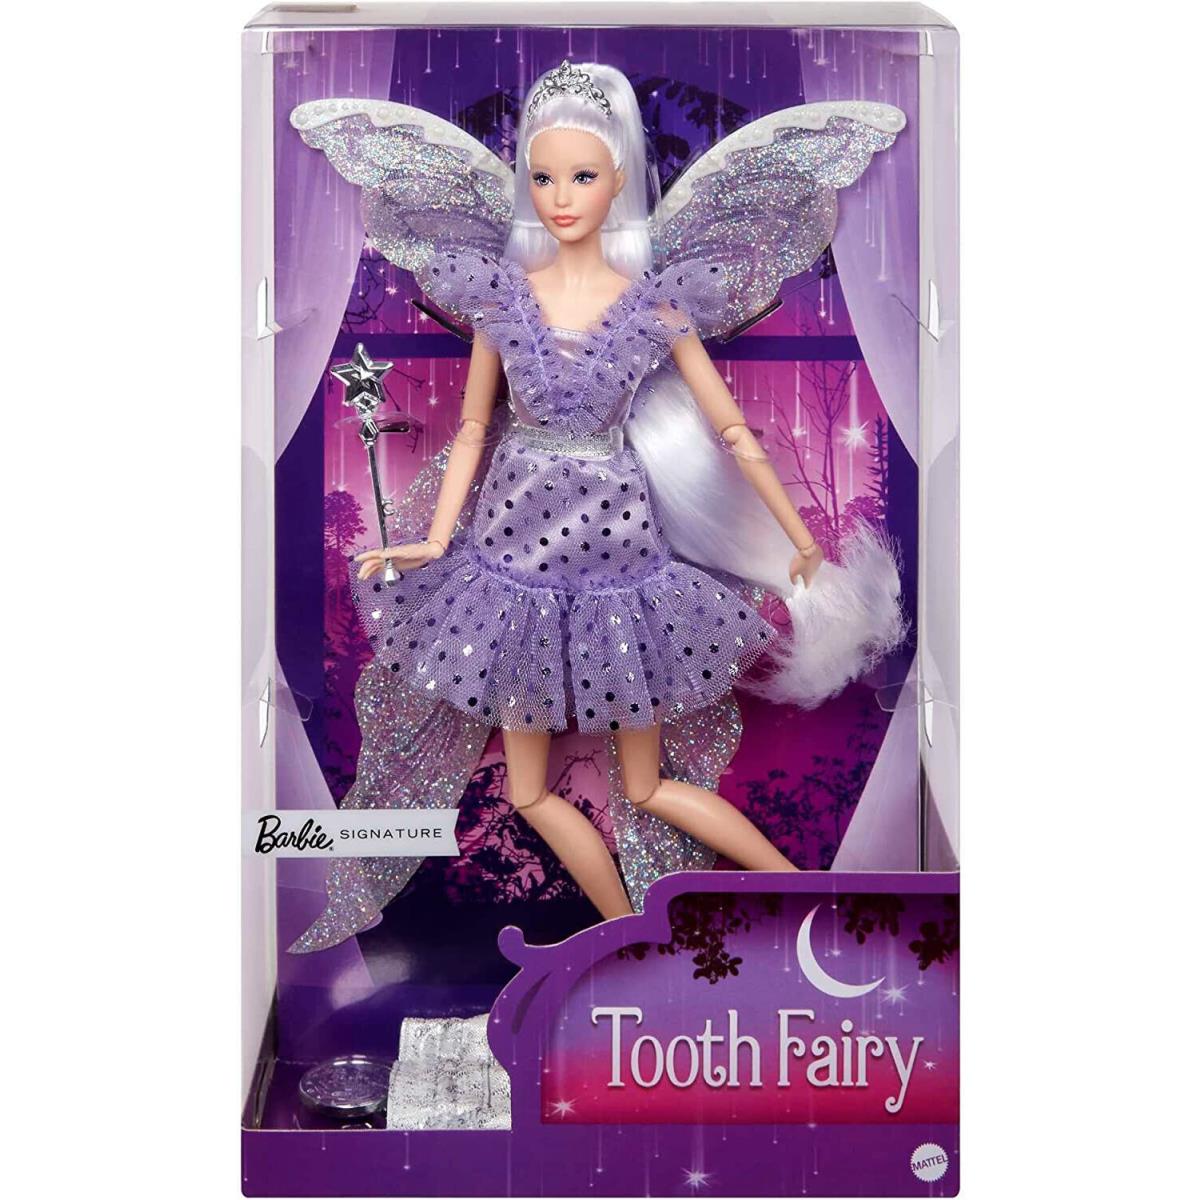 Barbie Signature Tooth Fairy Doll